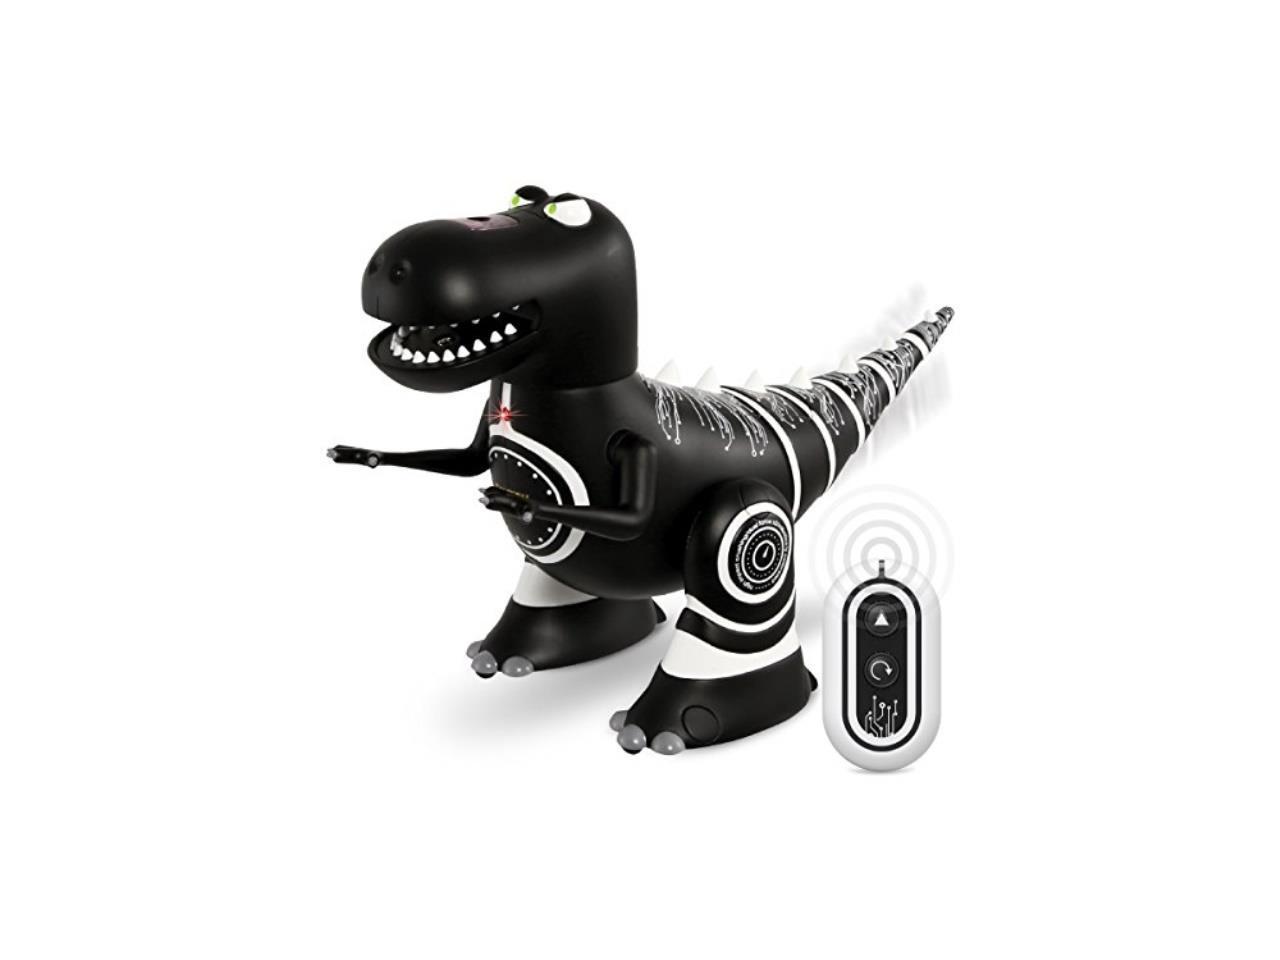 black and white remote control dinosaur